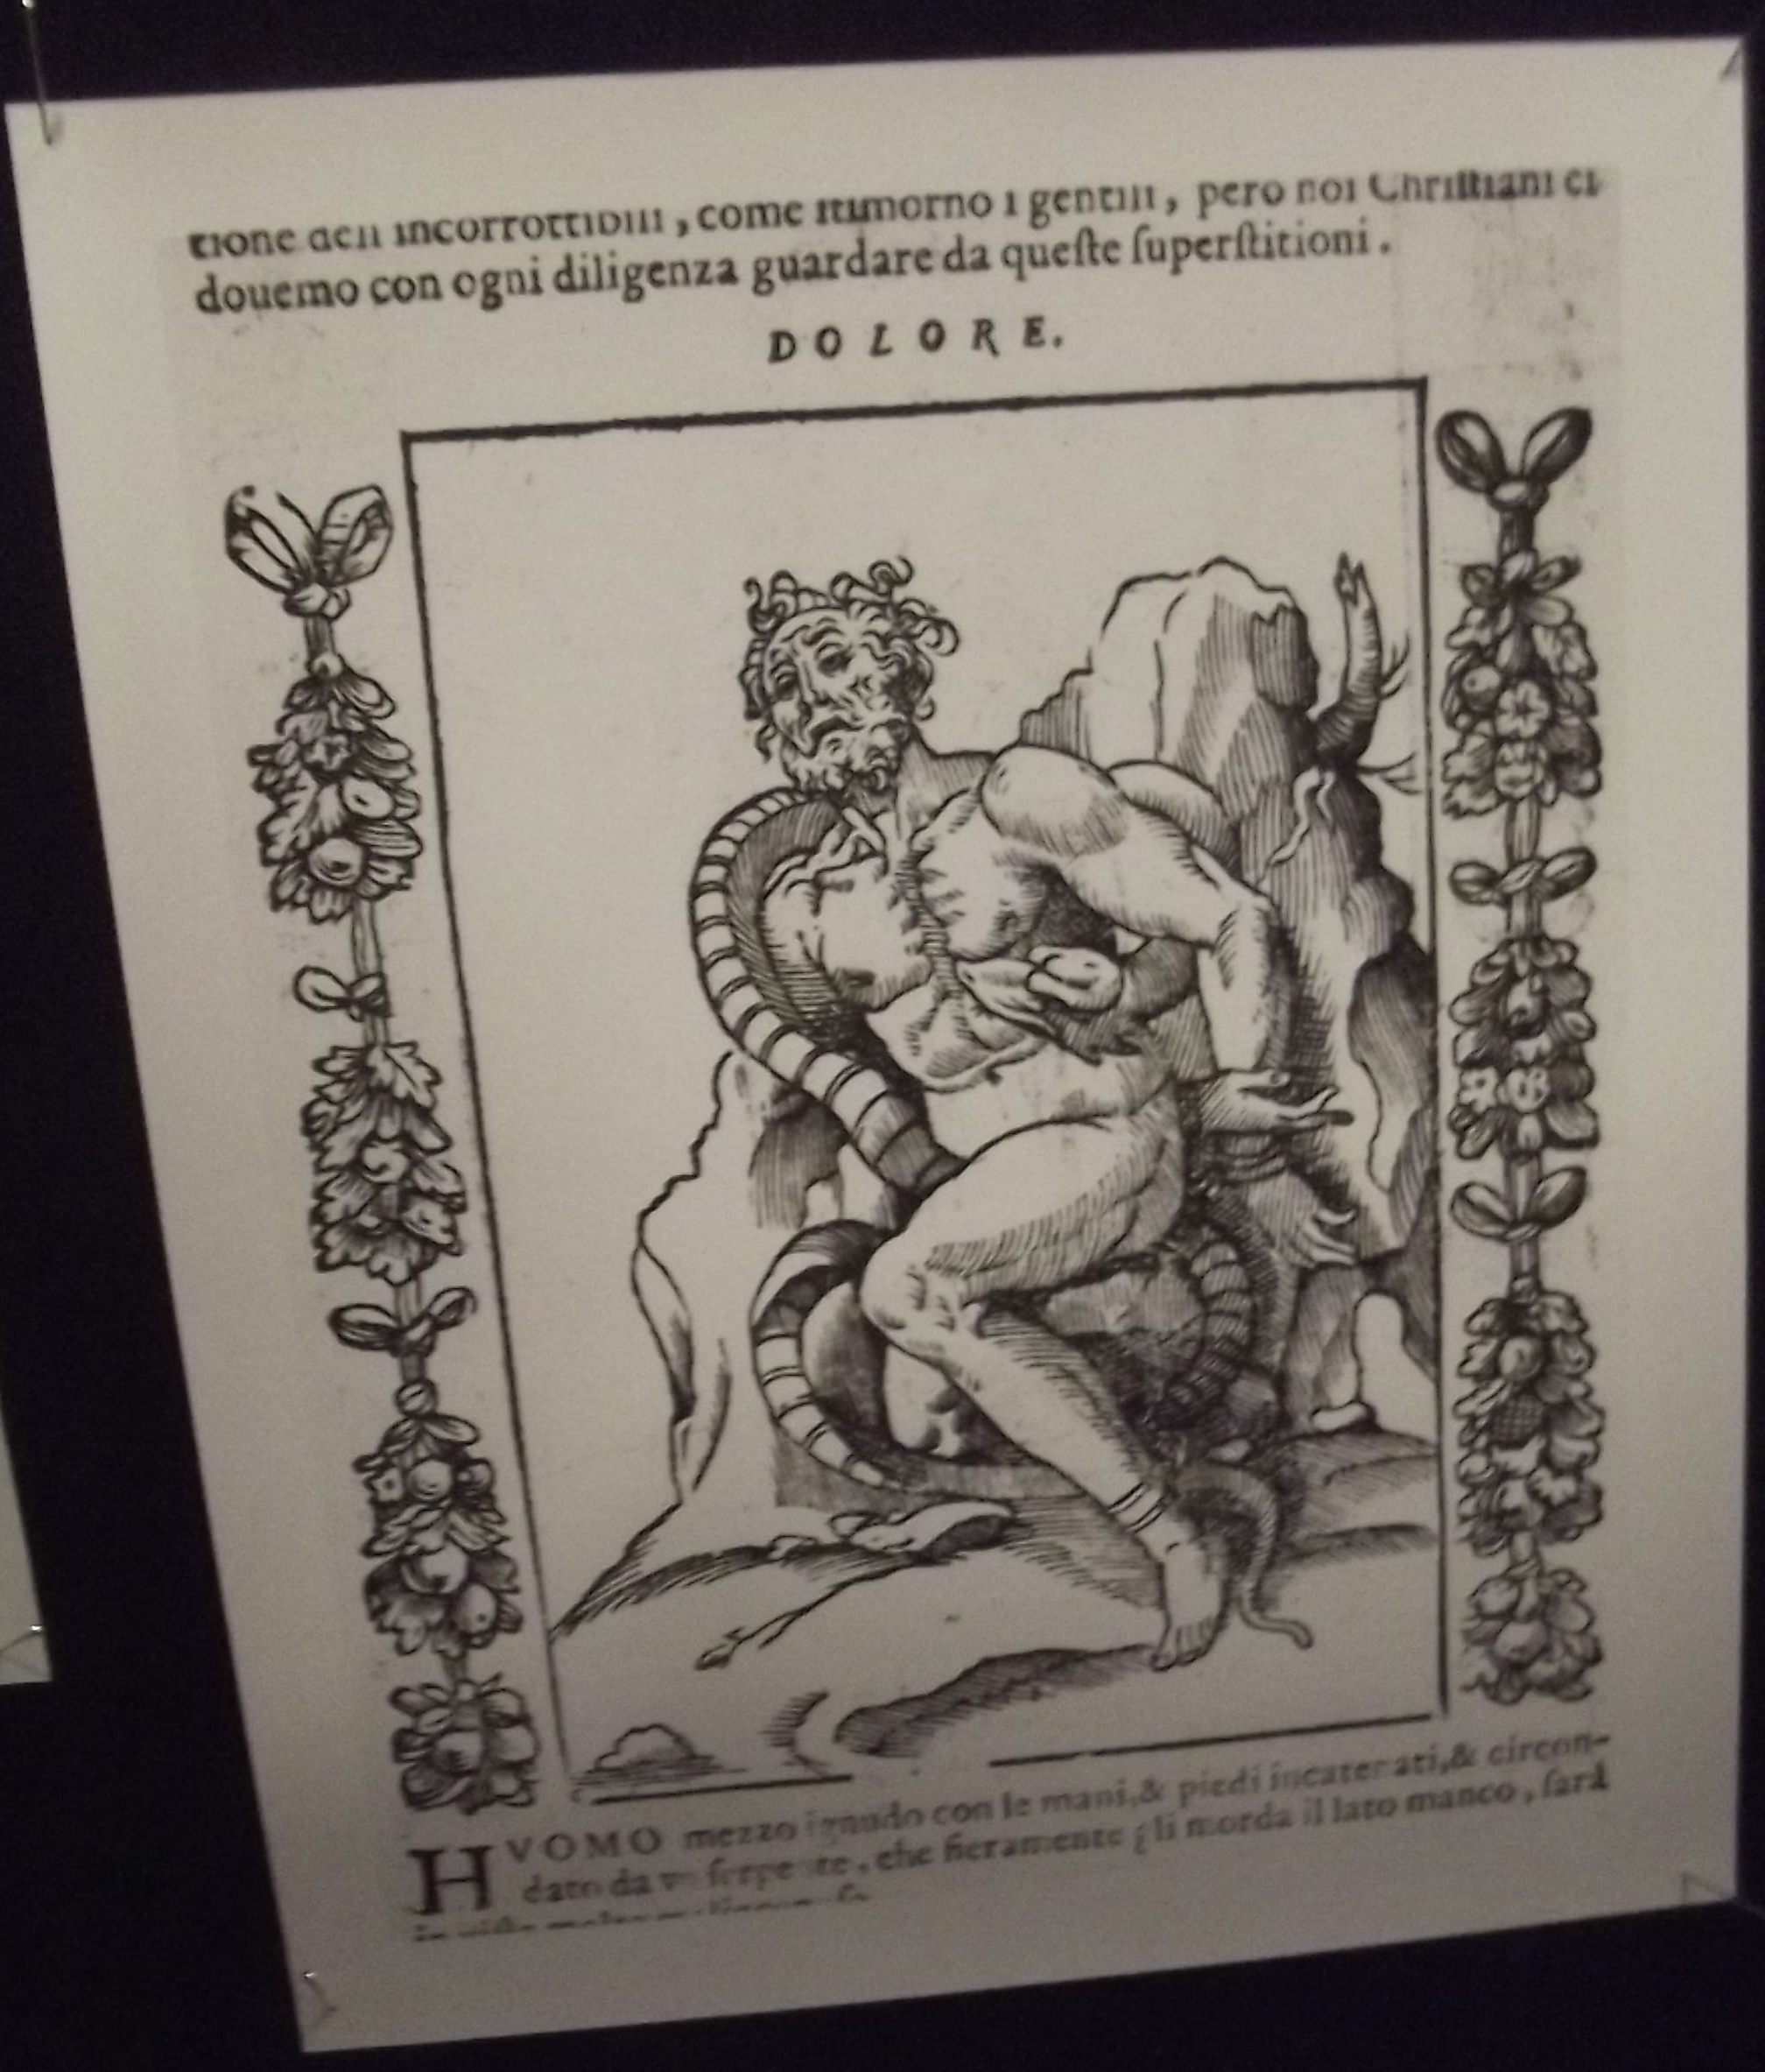 Laocoon symbole de la douleur. In Cesare Ripa "Iconologia" (1603)